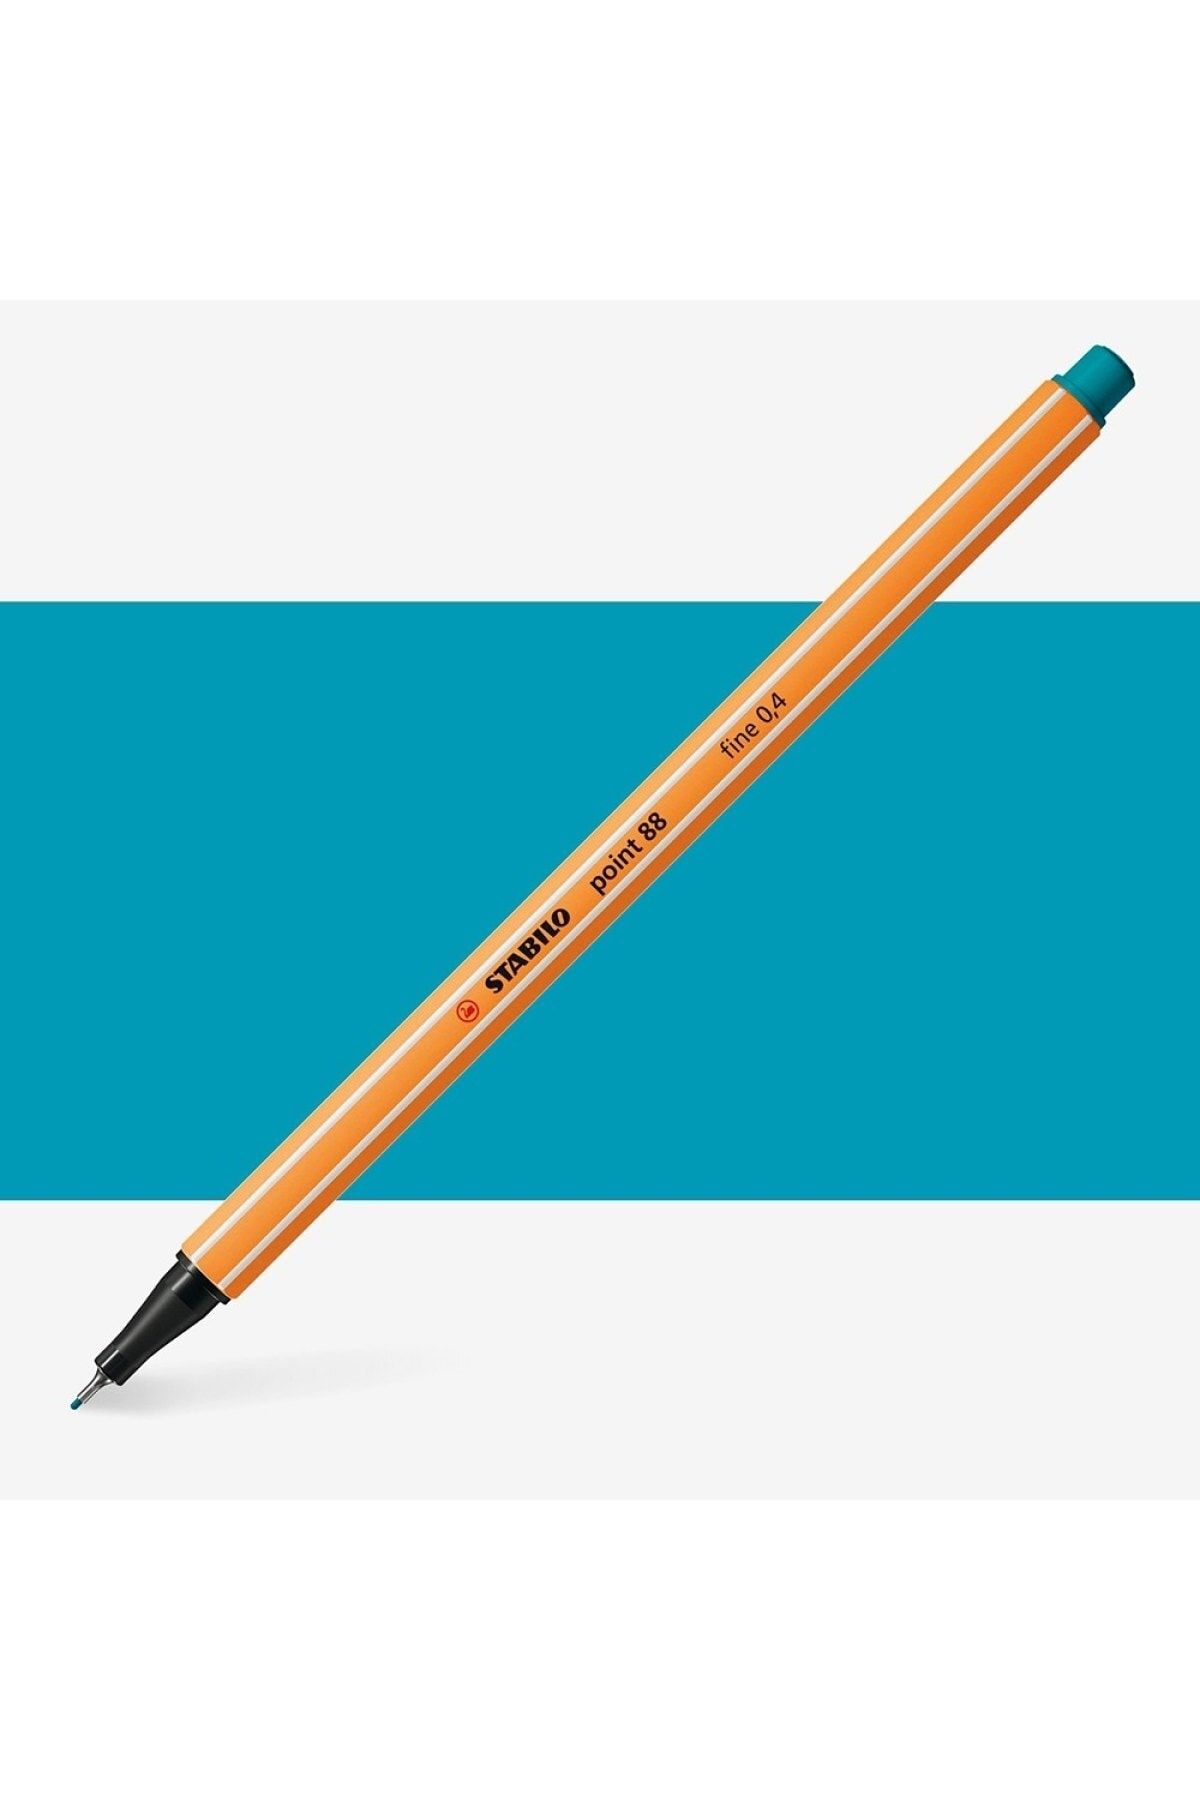 Stabilo Point 88 Fineliner Pen 0.4mm Ince Keçe Uçlu Kalem Turkuaz Mavi